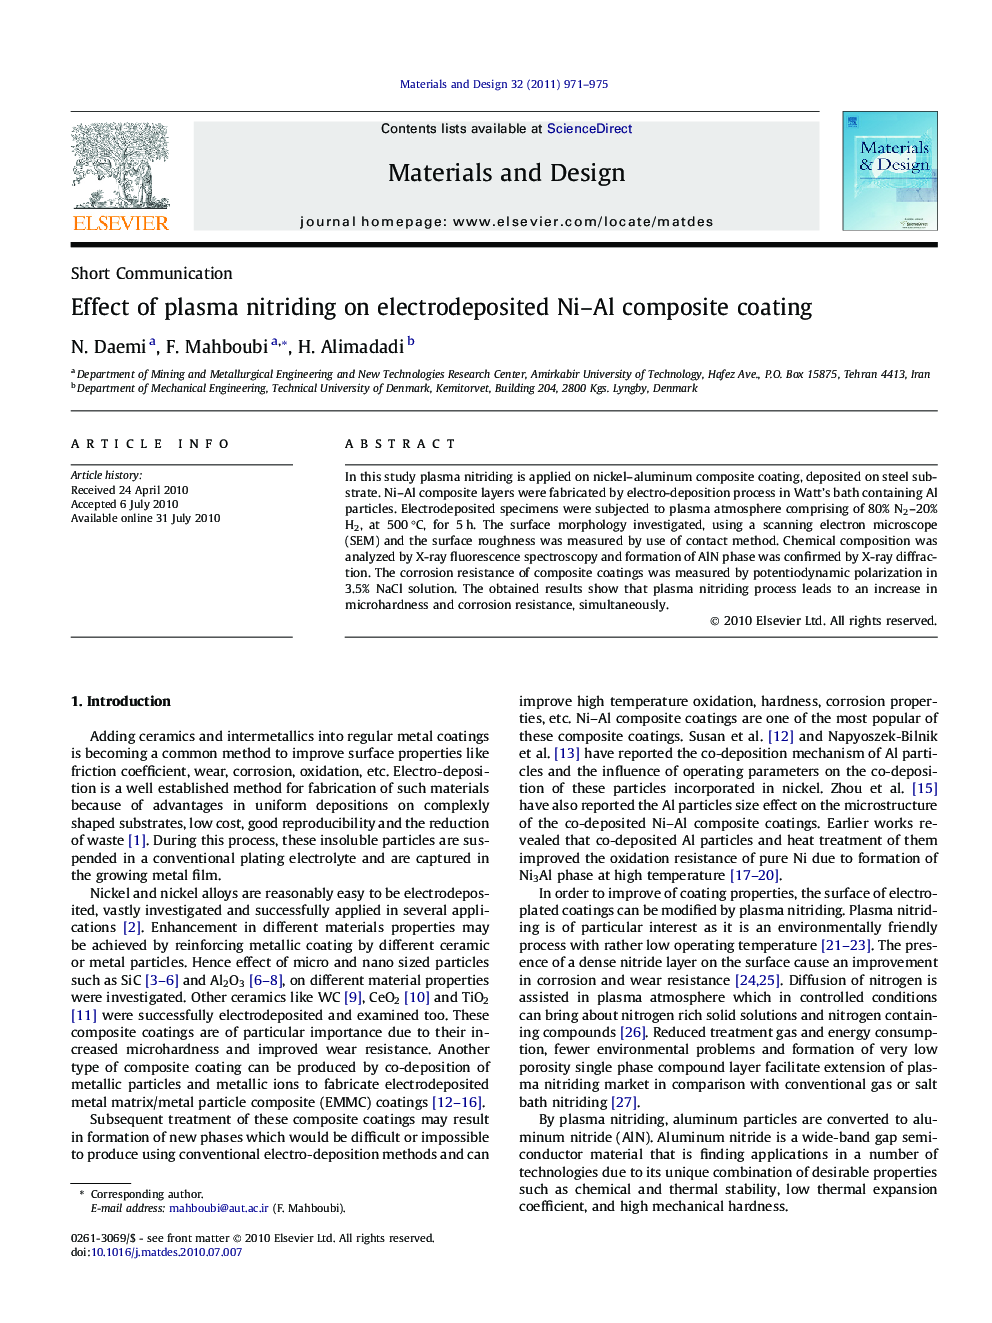 Effect of plasma nitriding on electrodeposited Ni–Al composite coating